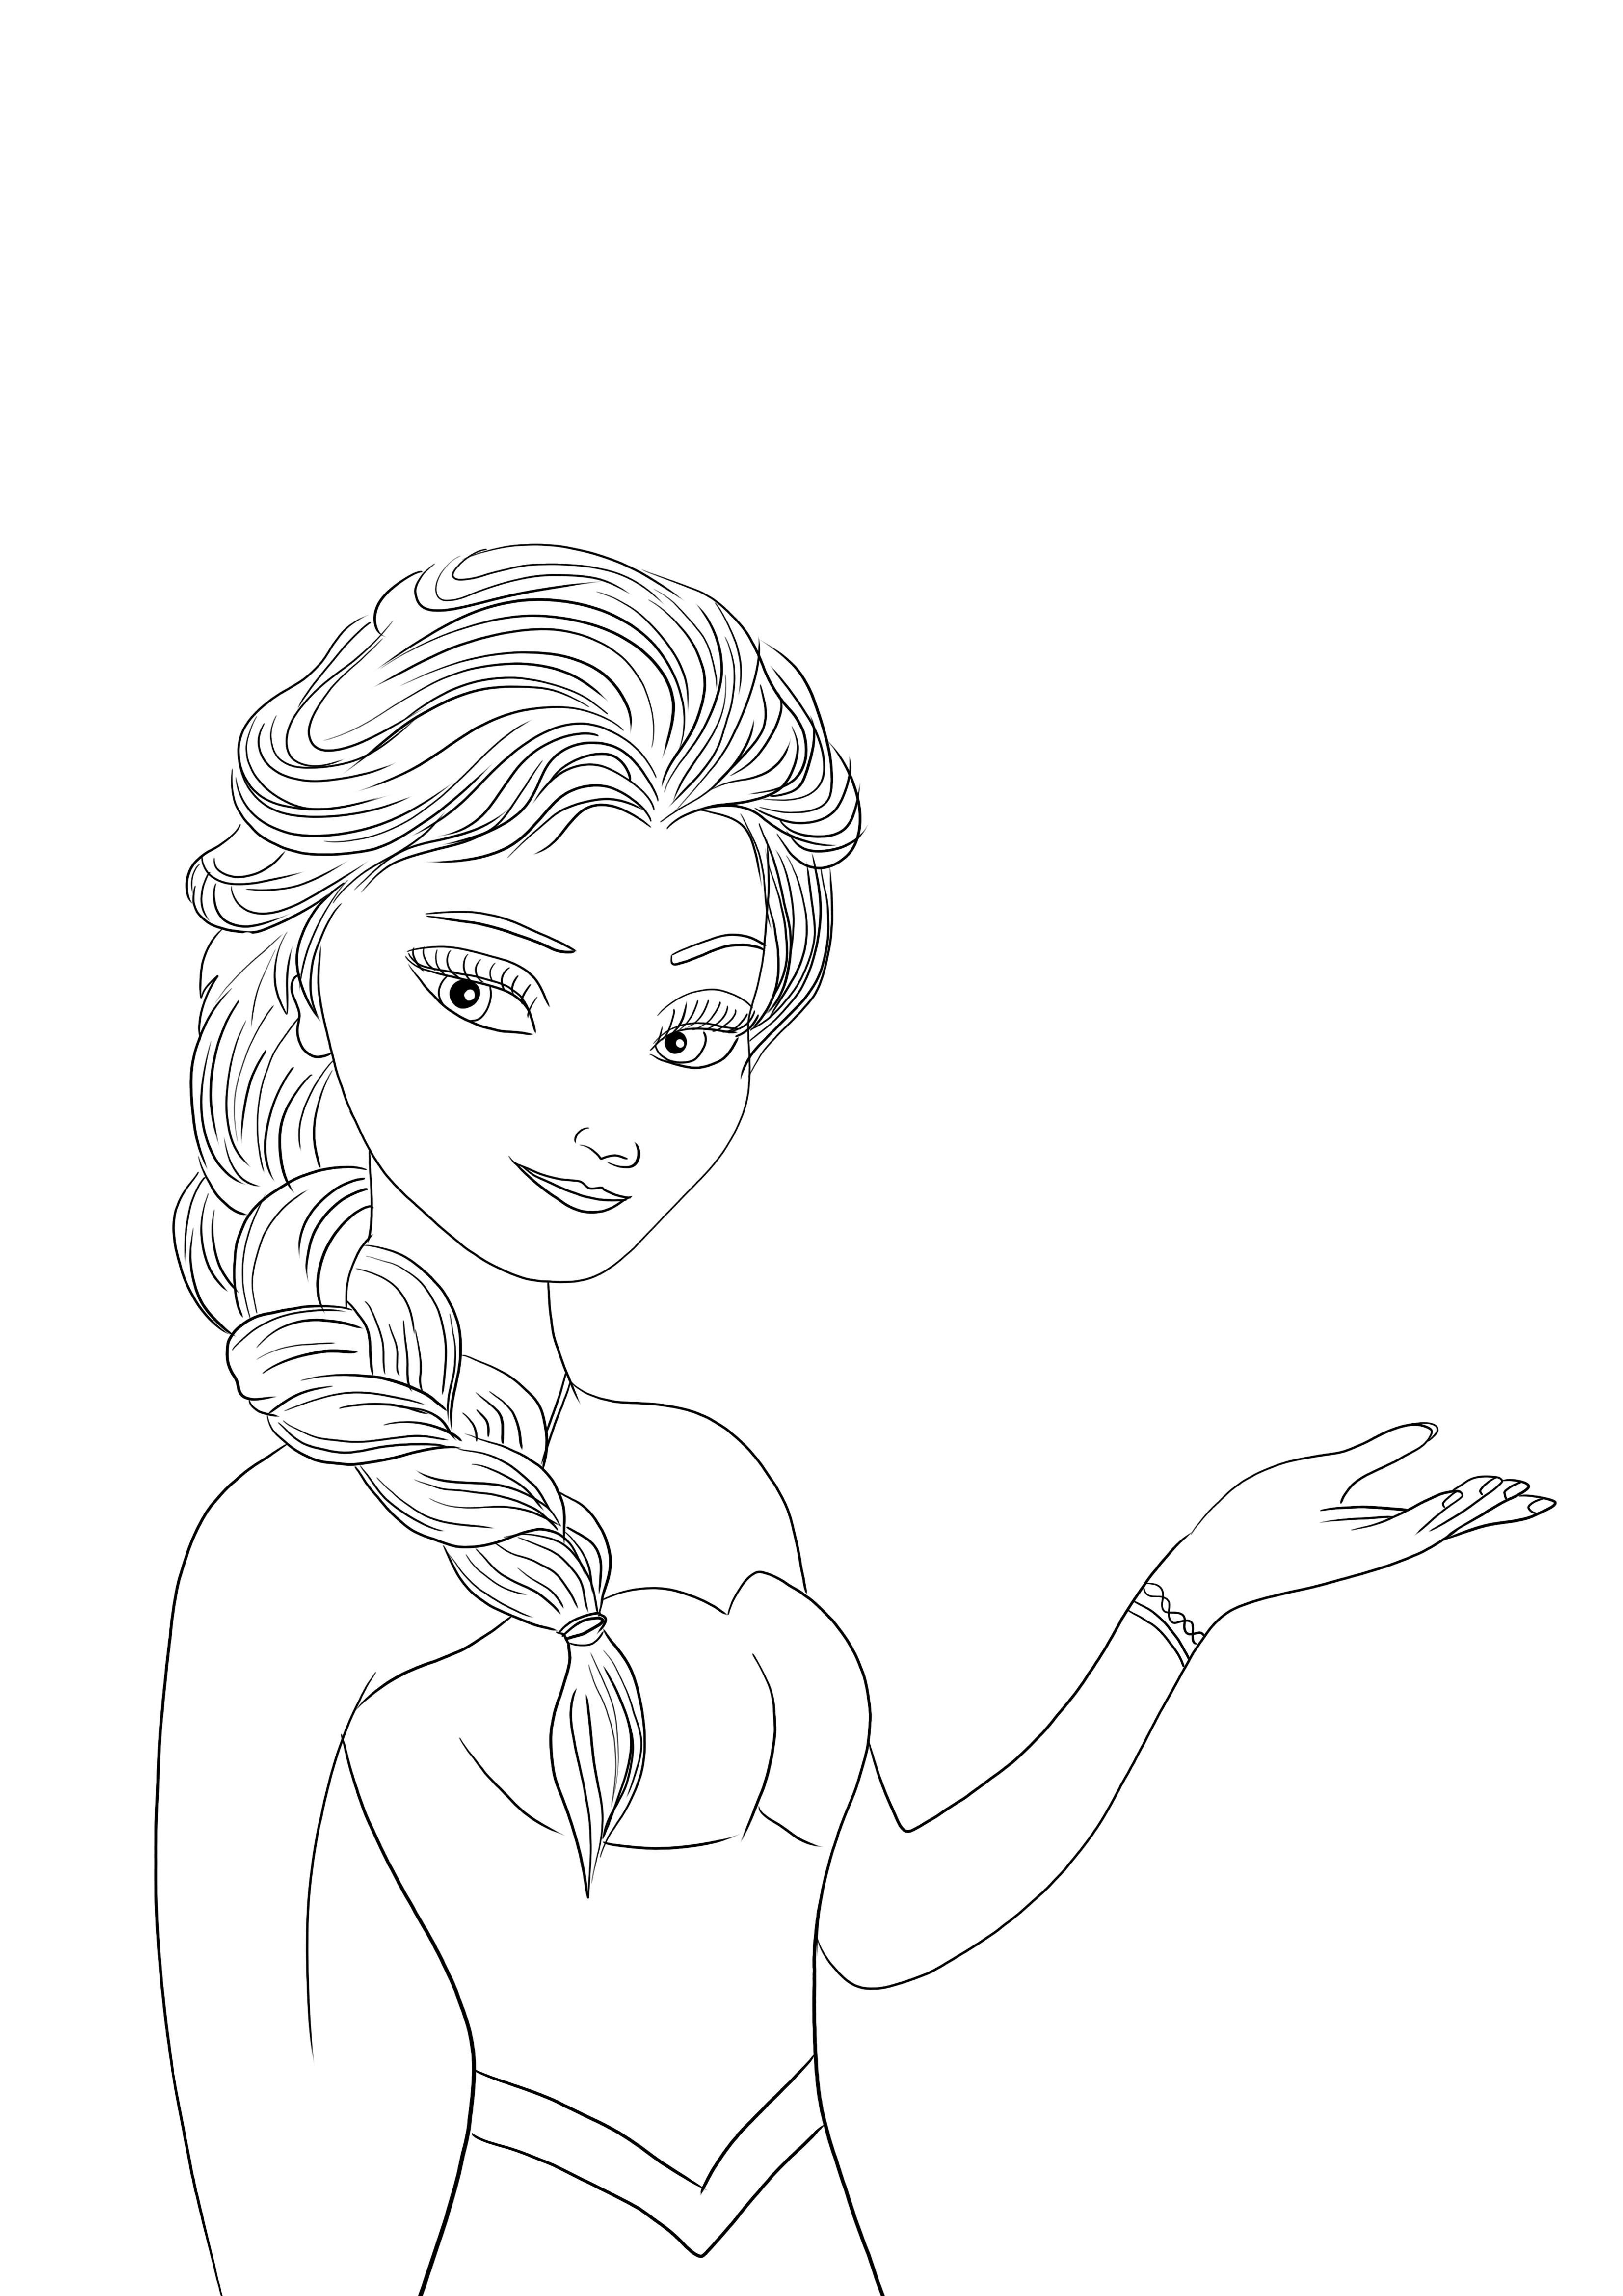 Piękna Piękna Elsa z filmu Kraina Lodu do pobrania za darmo i łatwa do pokolorowania z filmu Kraina Lodu do pobrania za darmo i łatwa do pokolorowania